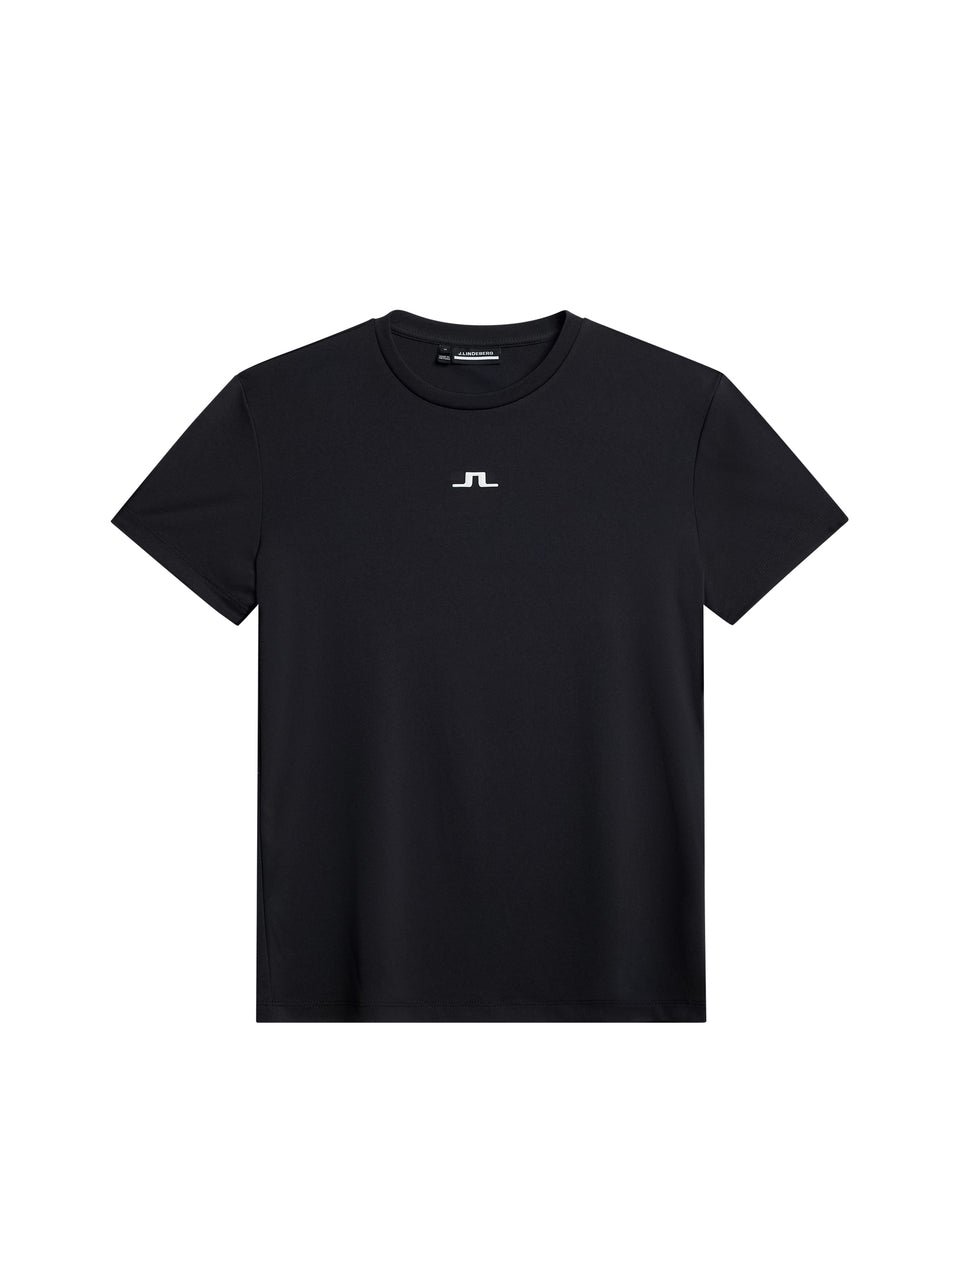 Ada T-shirt / Black